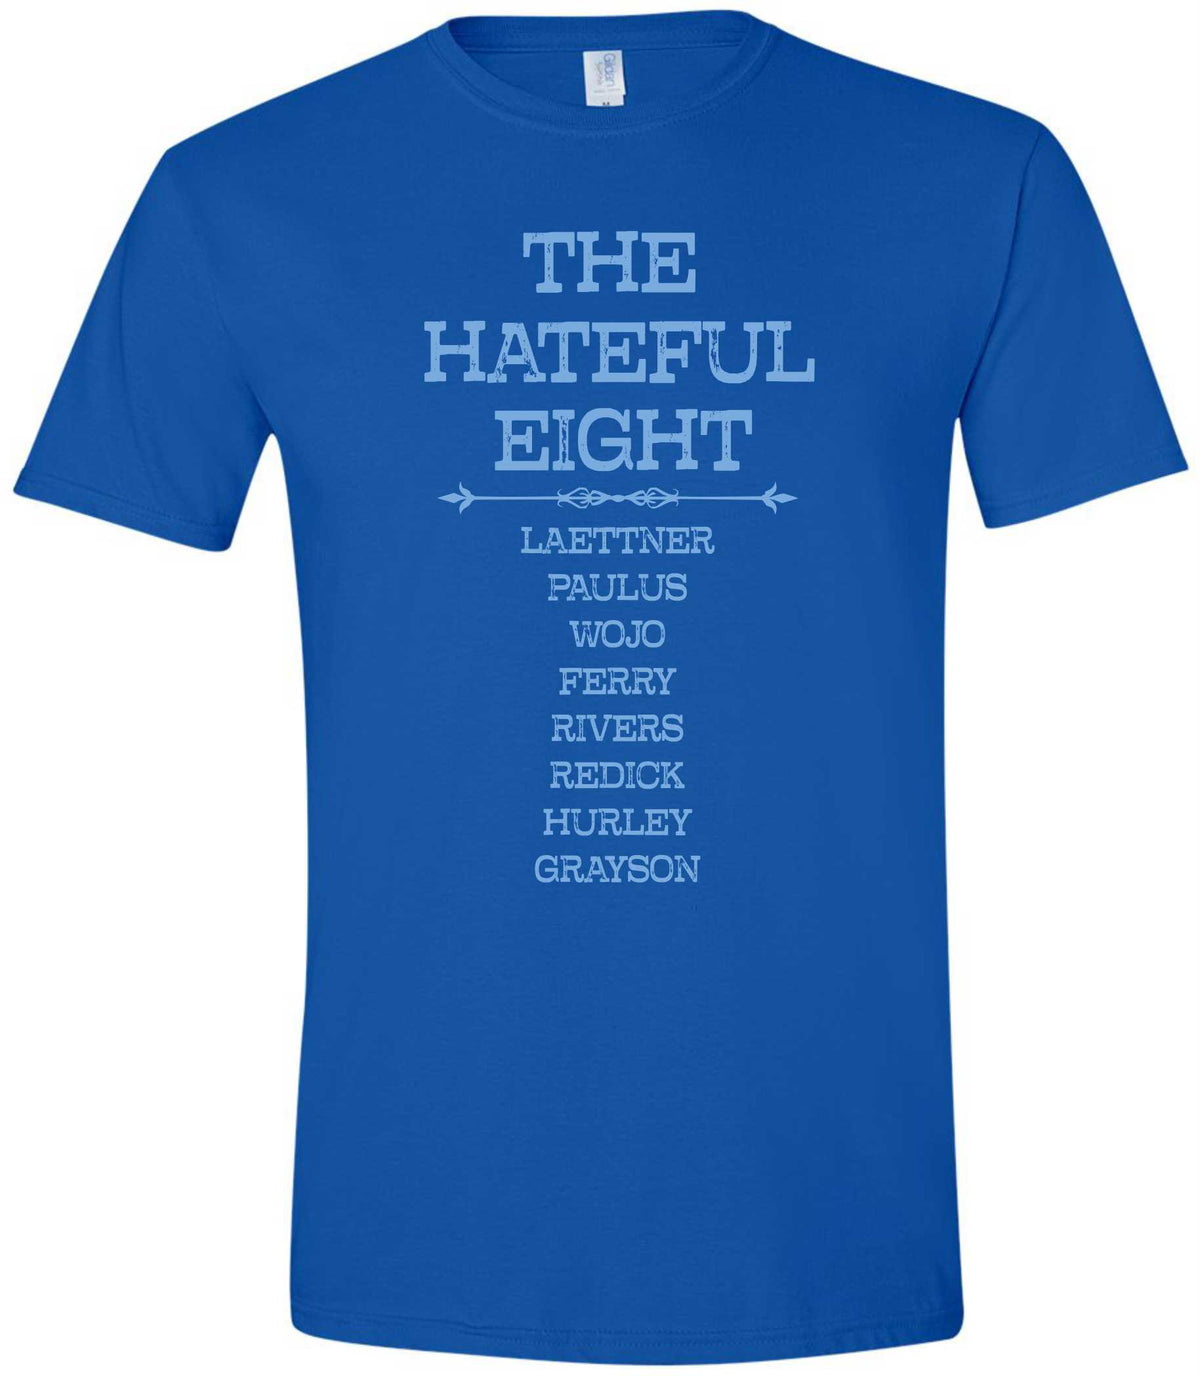 The Hateful 8 Statement T-Shirt